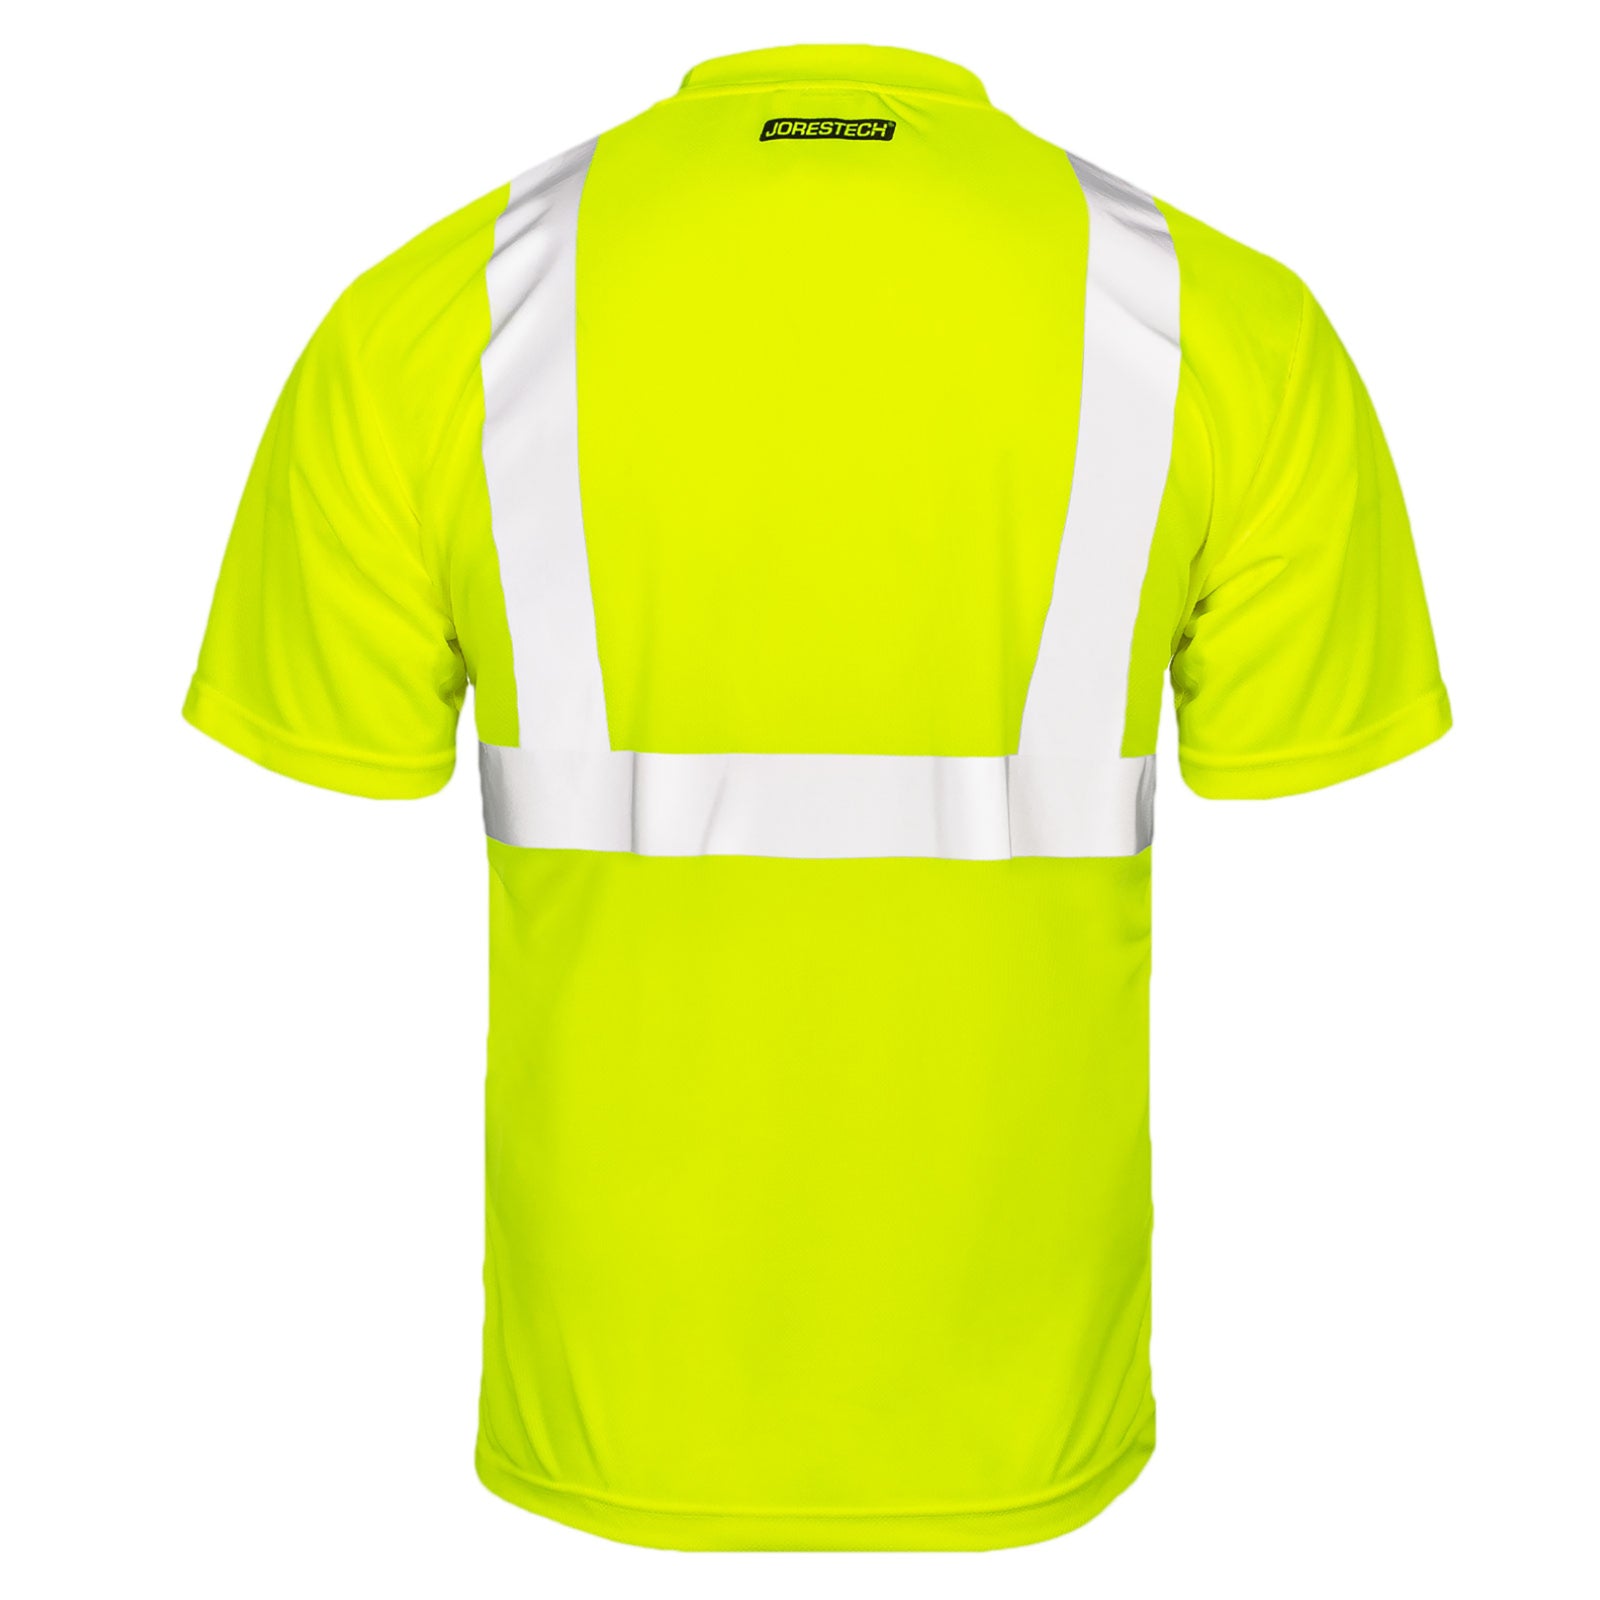 Back heat transfer reflective ANSI class 2 type R safety shirt